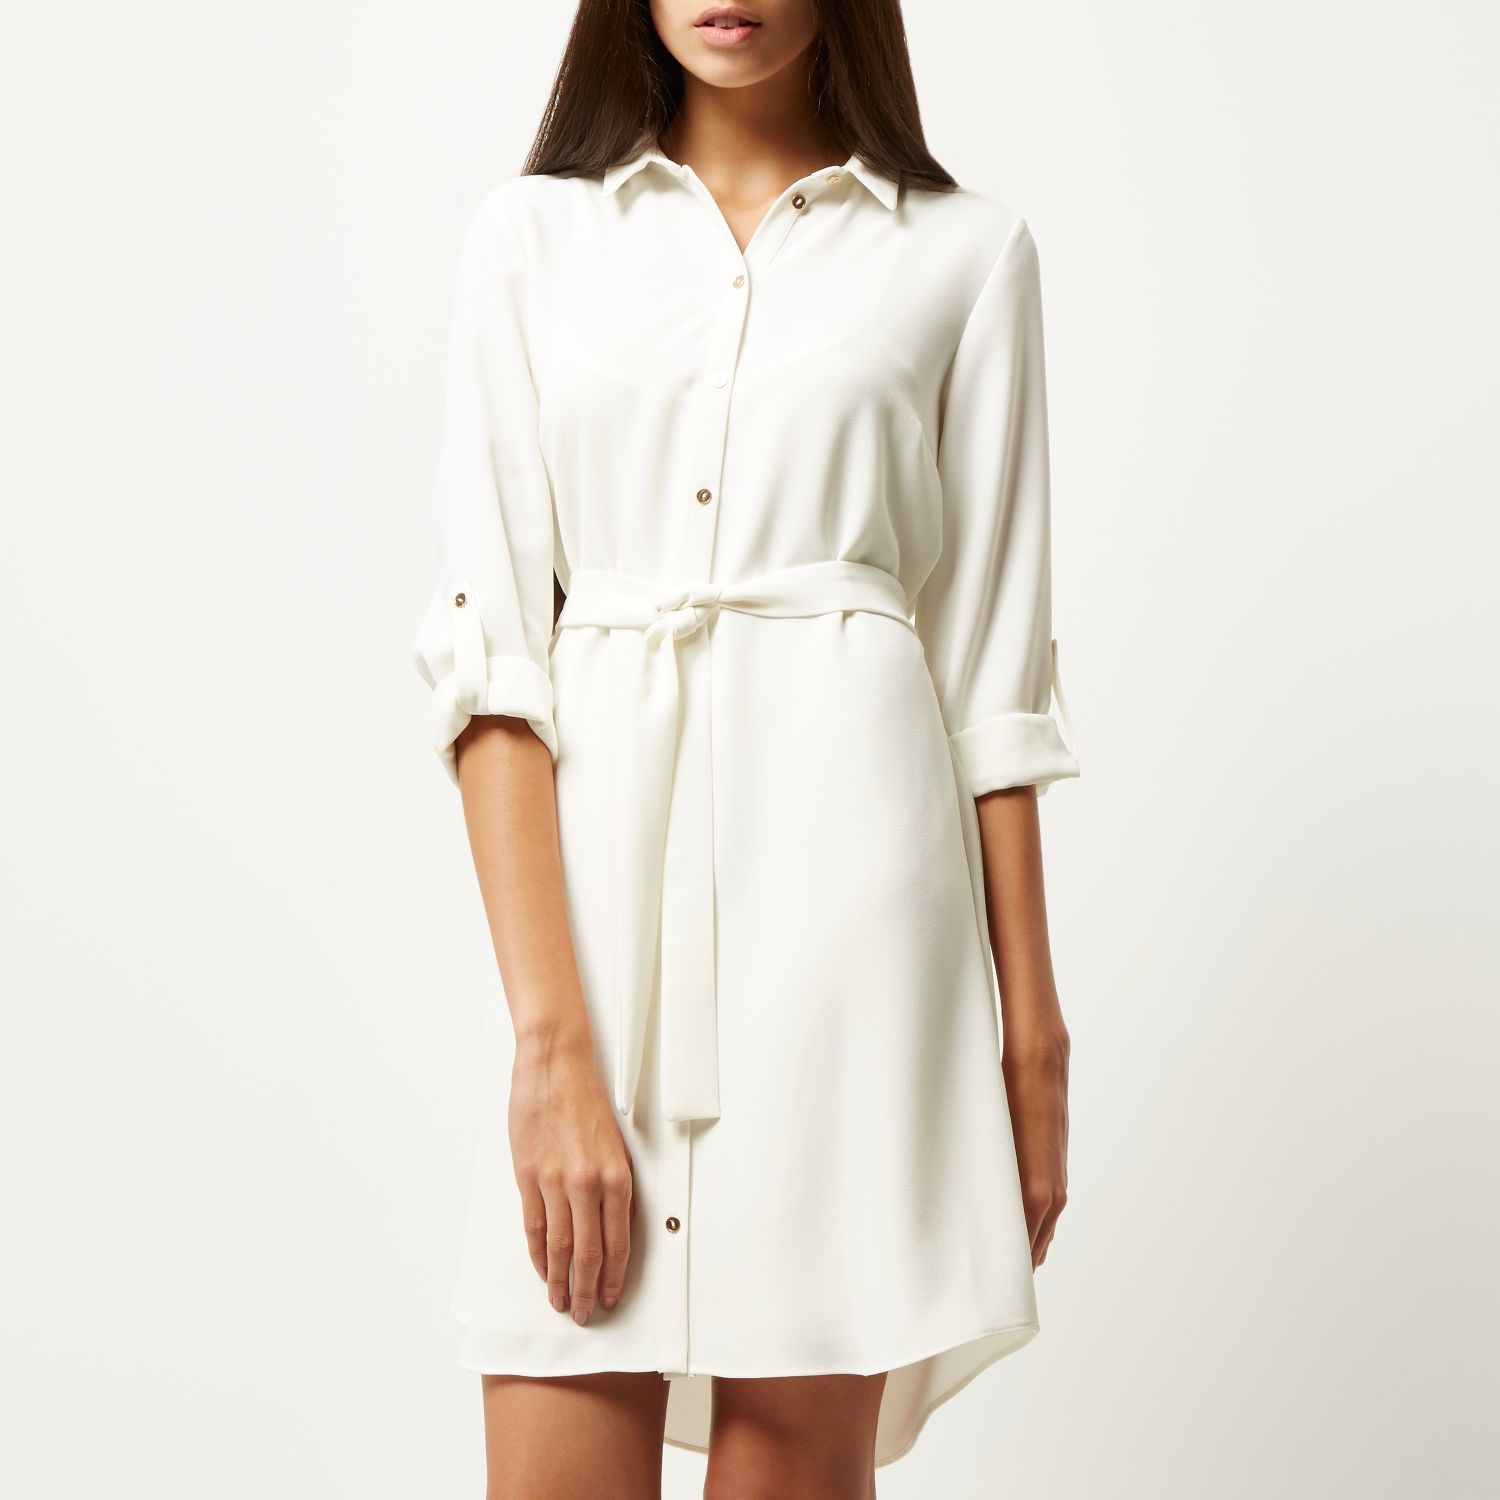 River Island White Lace Shirt Dress : Elegant And Beautiful